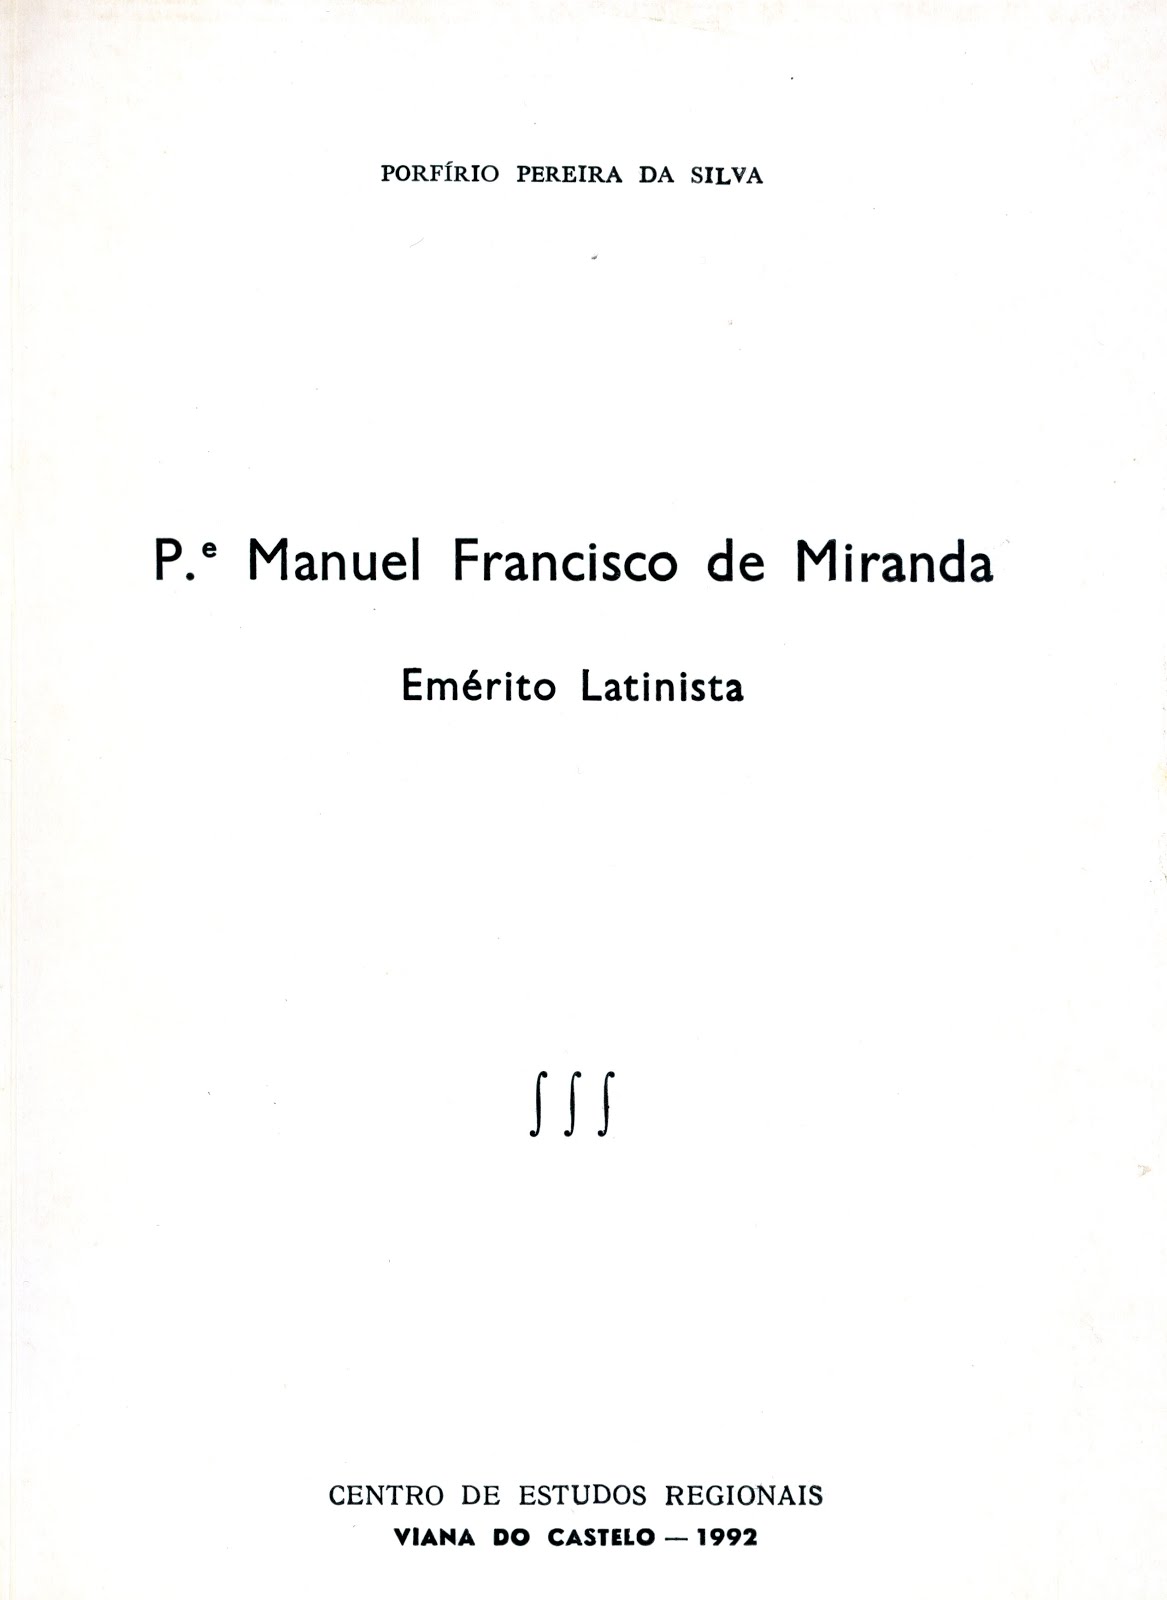 MANUEL FRANCISCO DE MIRANDA: EMÉRITO LATINISTA